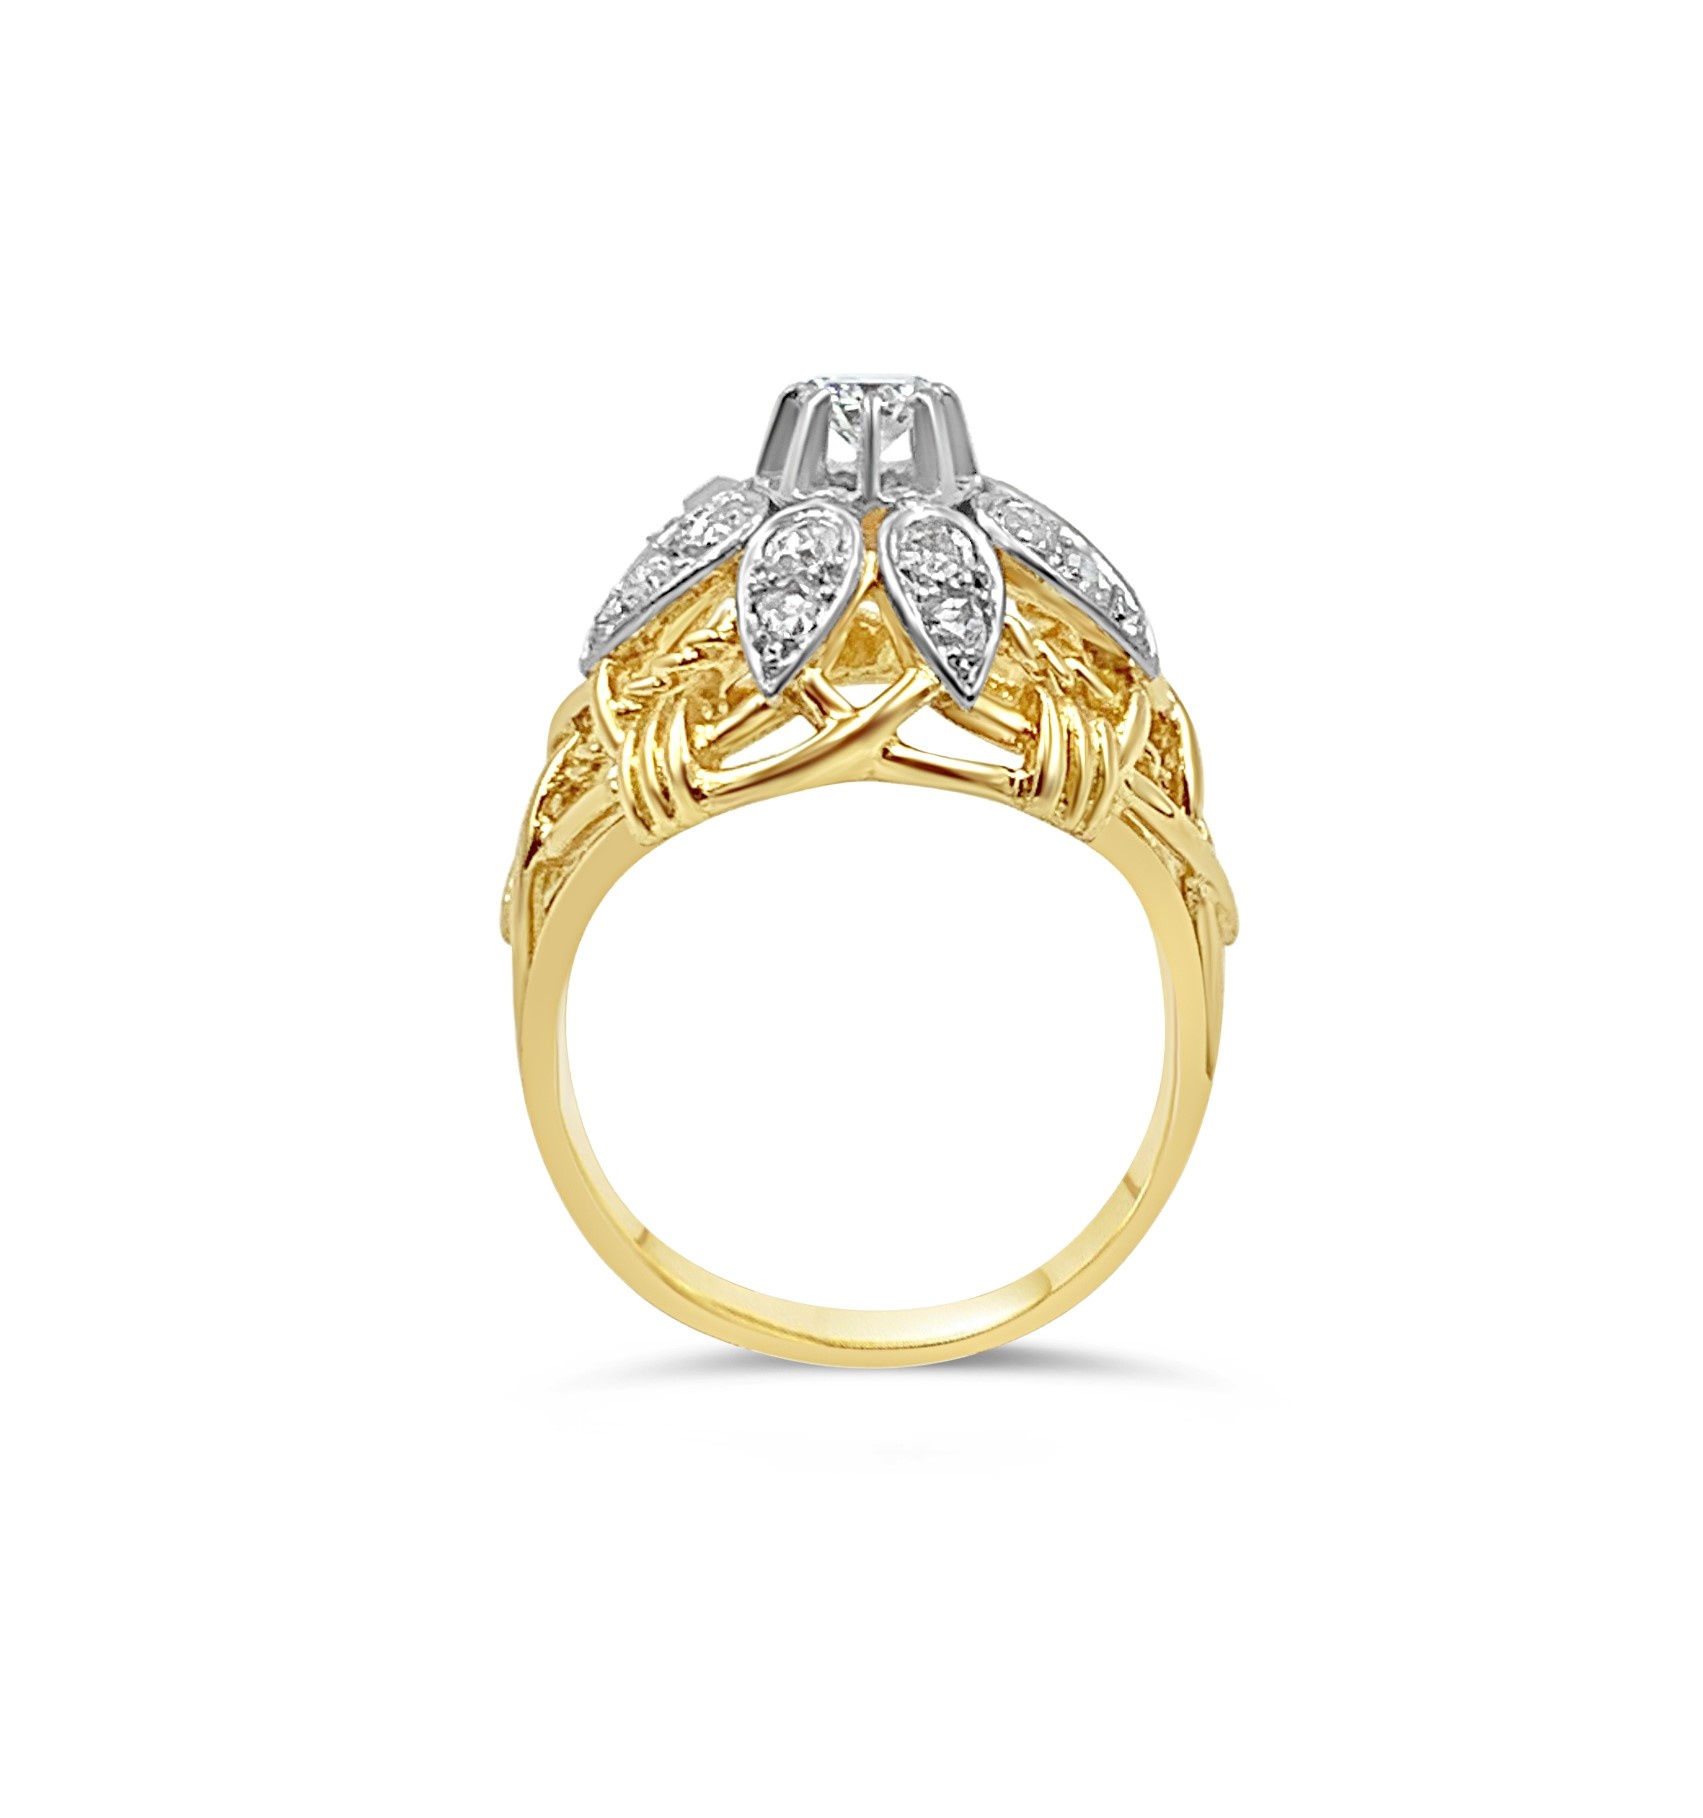 Vintage 18k geel & wit goud ring met 0.75 ct diamanten